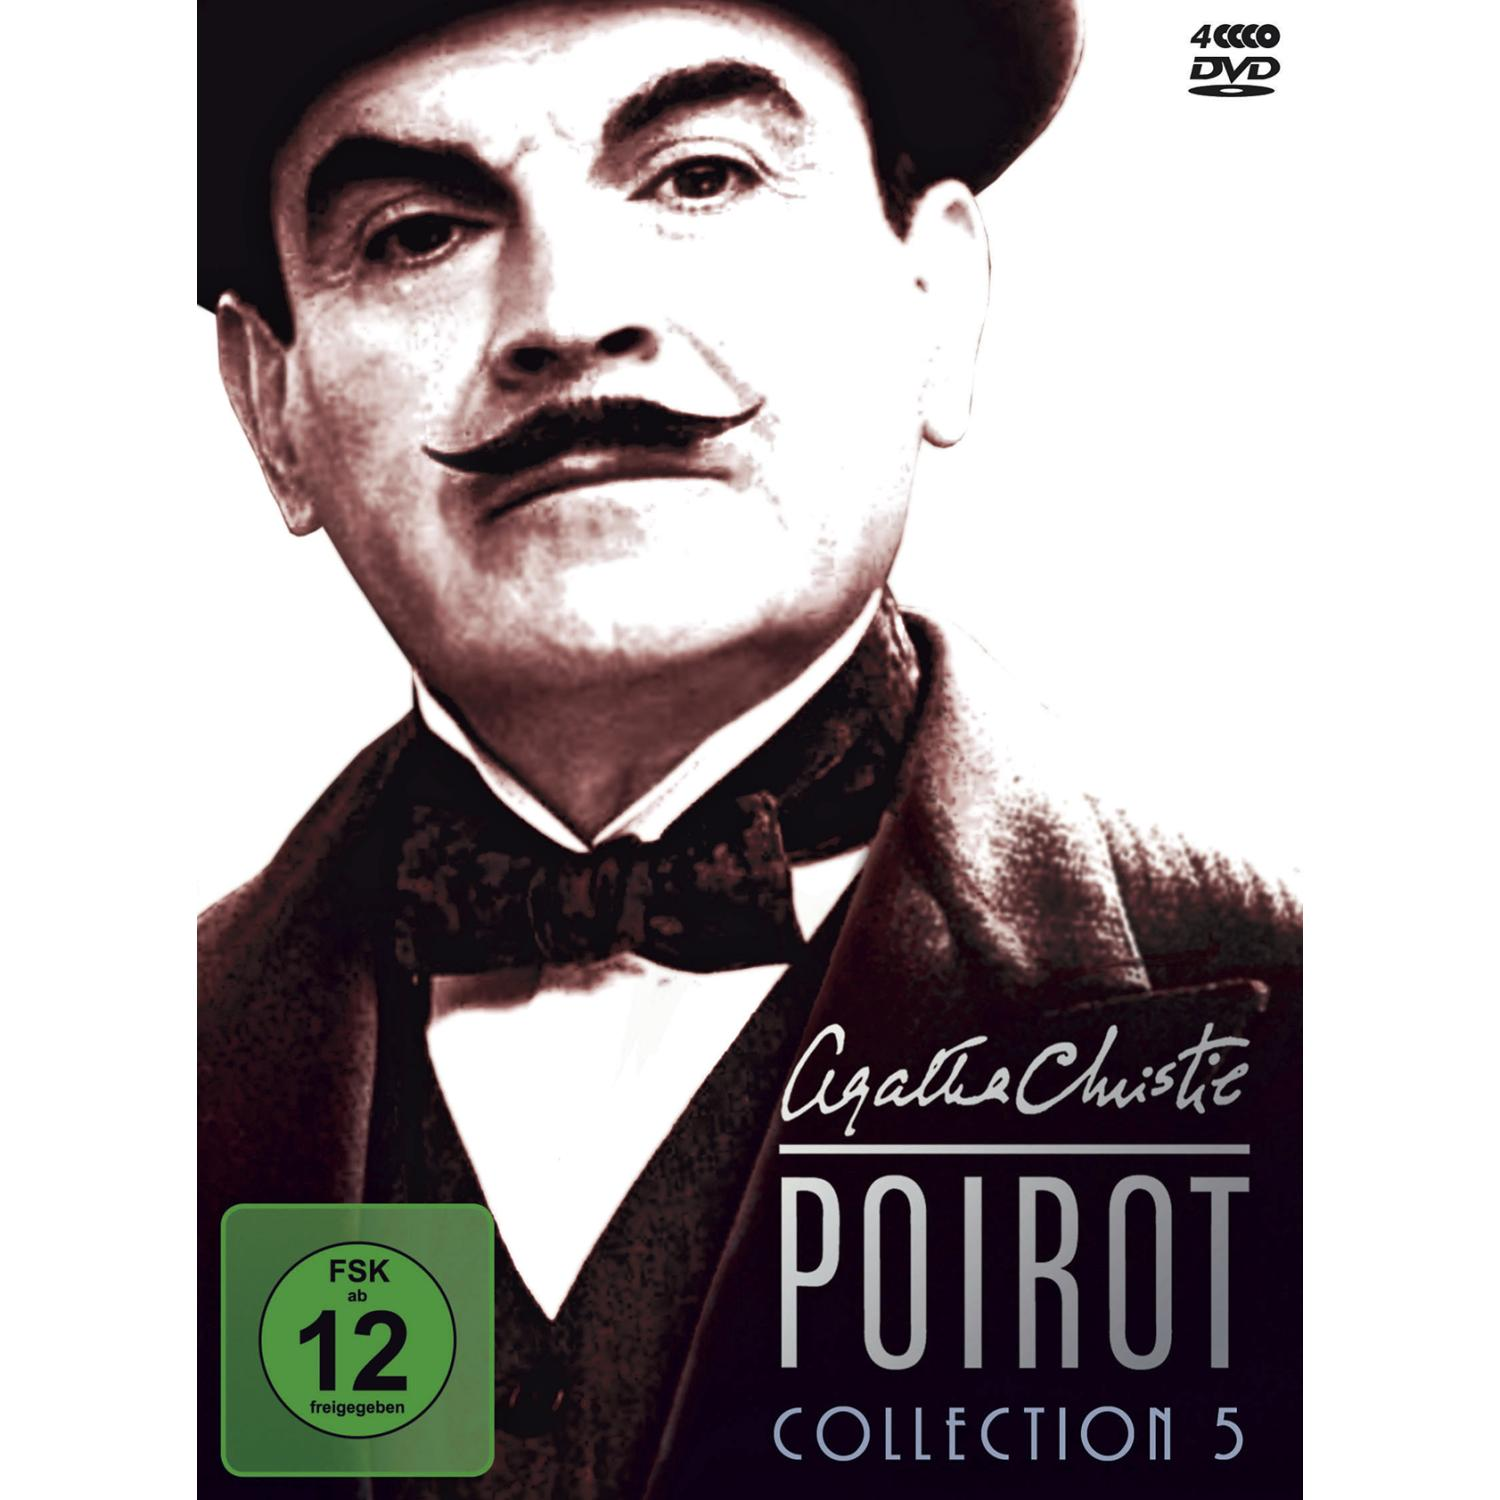 Agatha Christie: DVD Collection 5 Poirot 